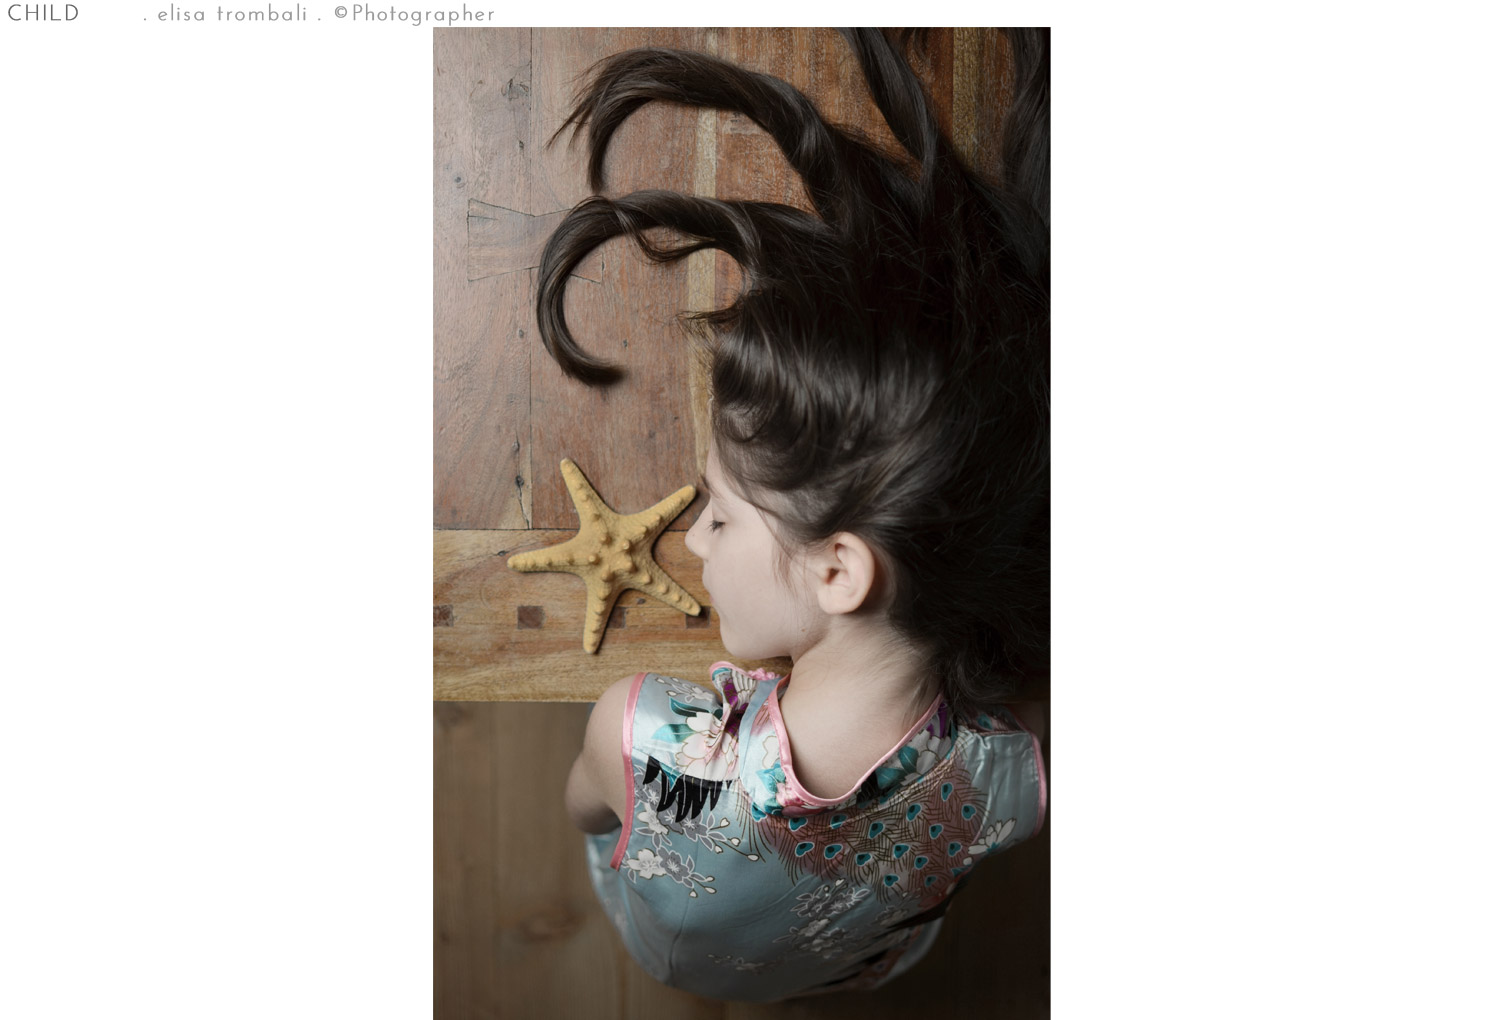 Child Melissa - Elisa Trombali Photographer